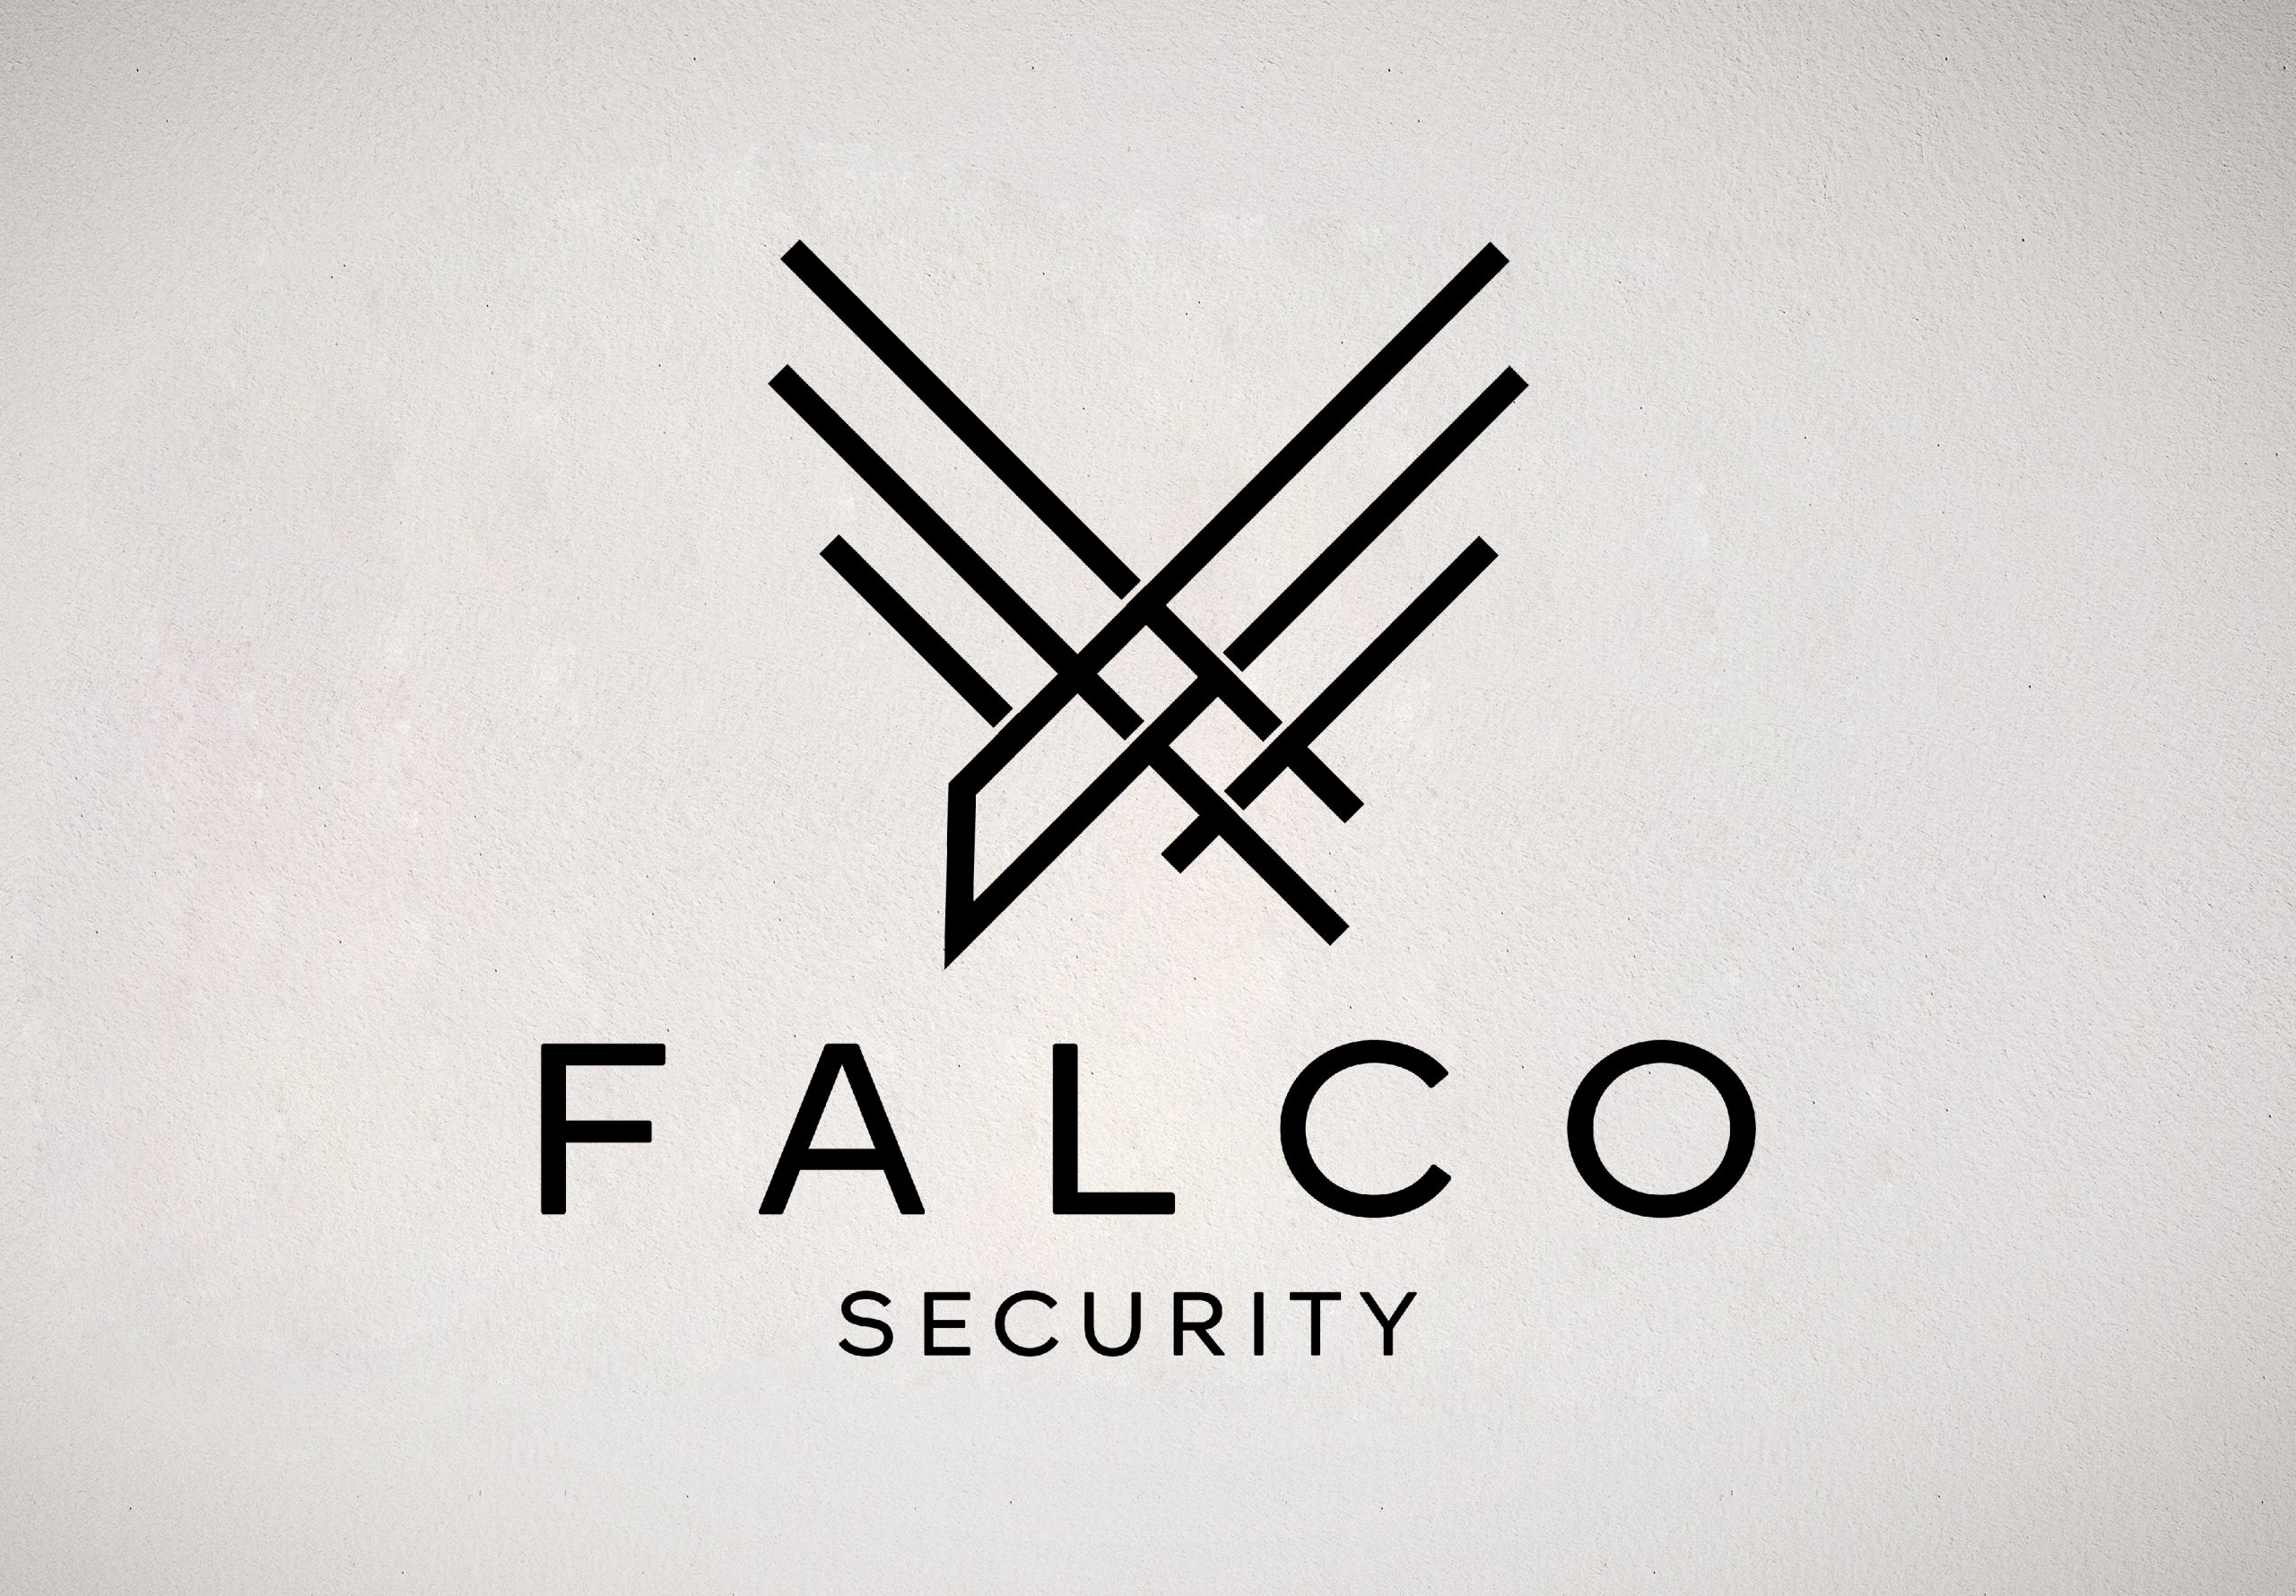 Falco security logo